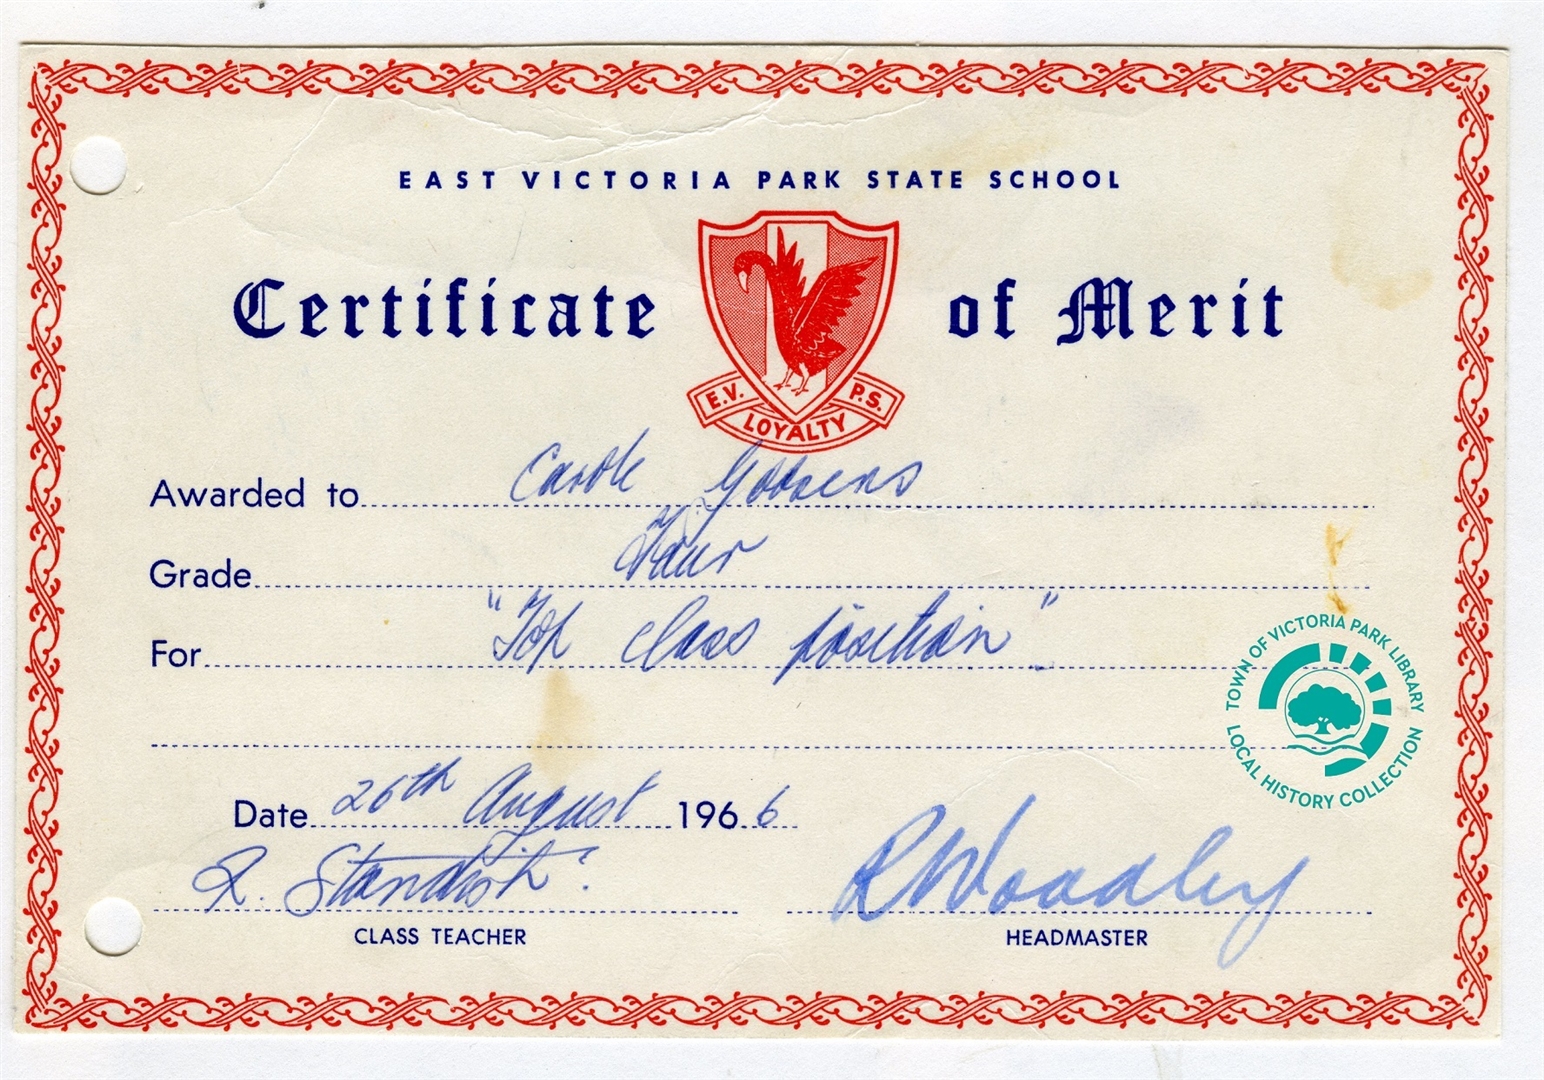 PH00046-02 East Victoria Park State School Certificate of Merit, 26 August 1966 Image